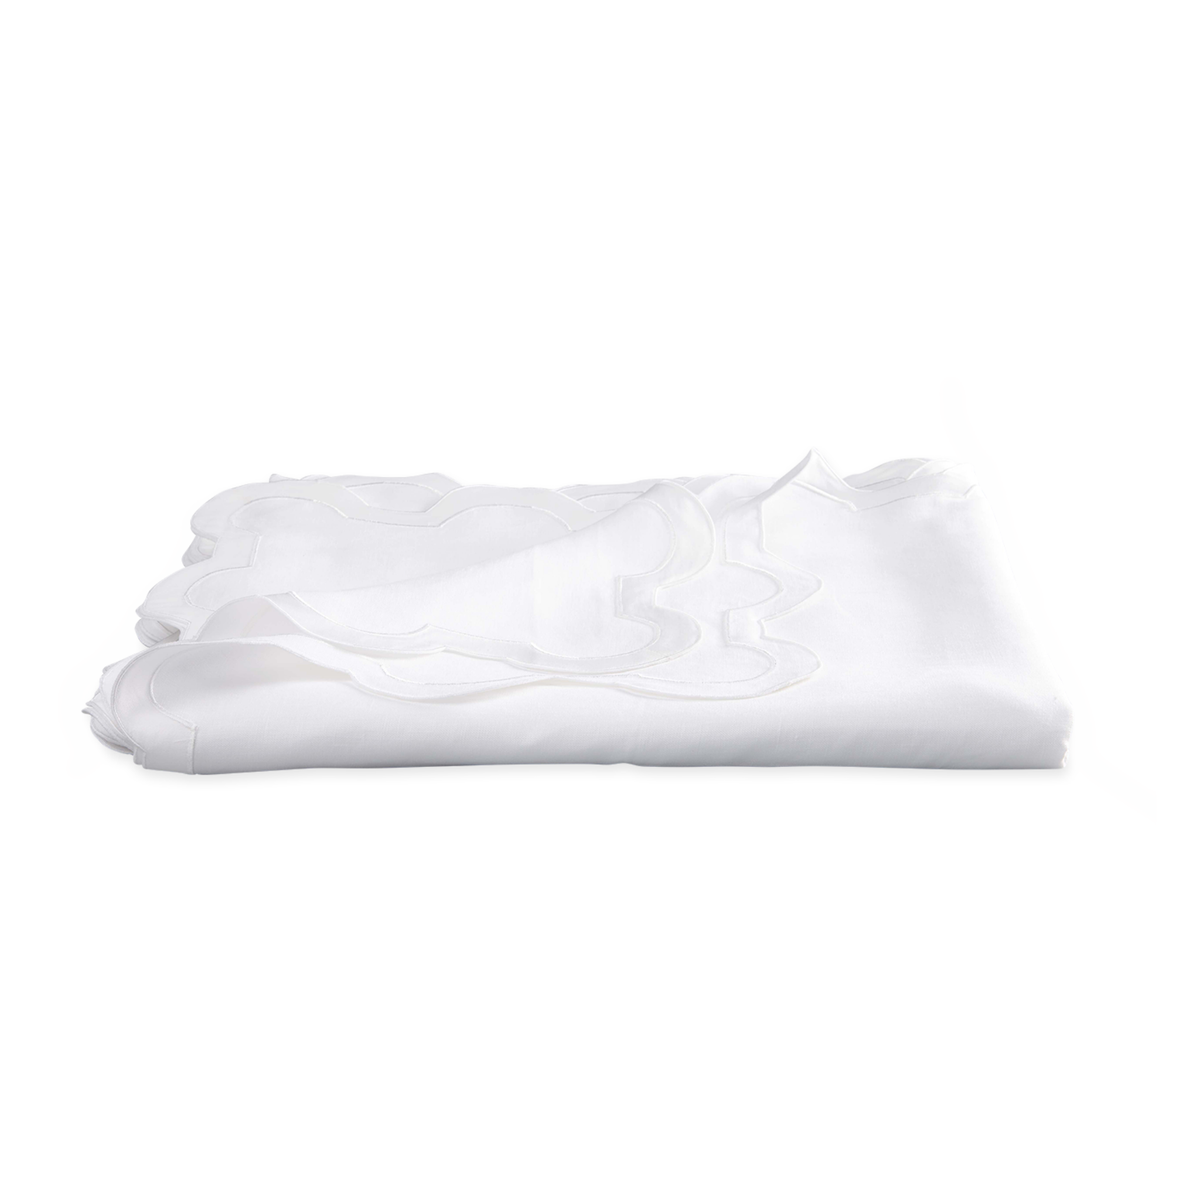 Matouk Mirasol Table Linen Tablecloth in White Color